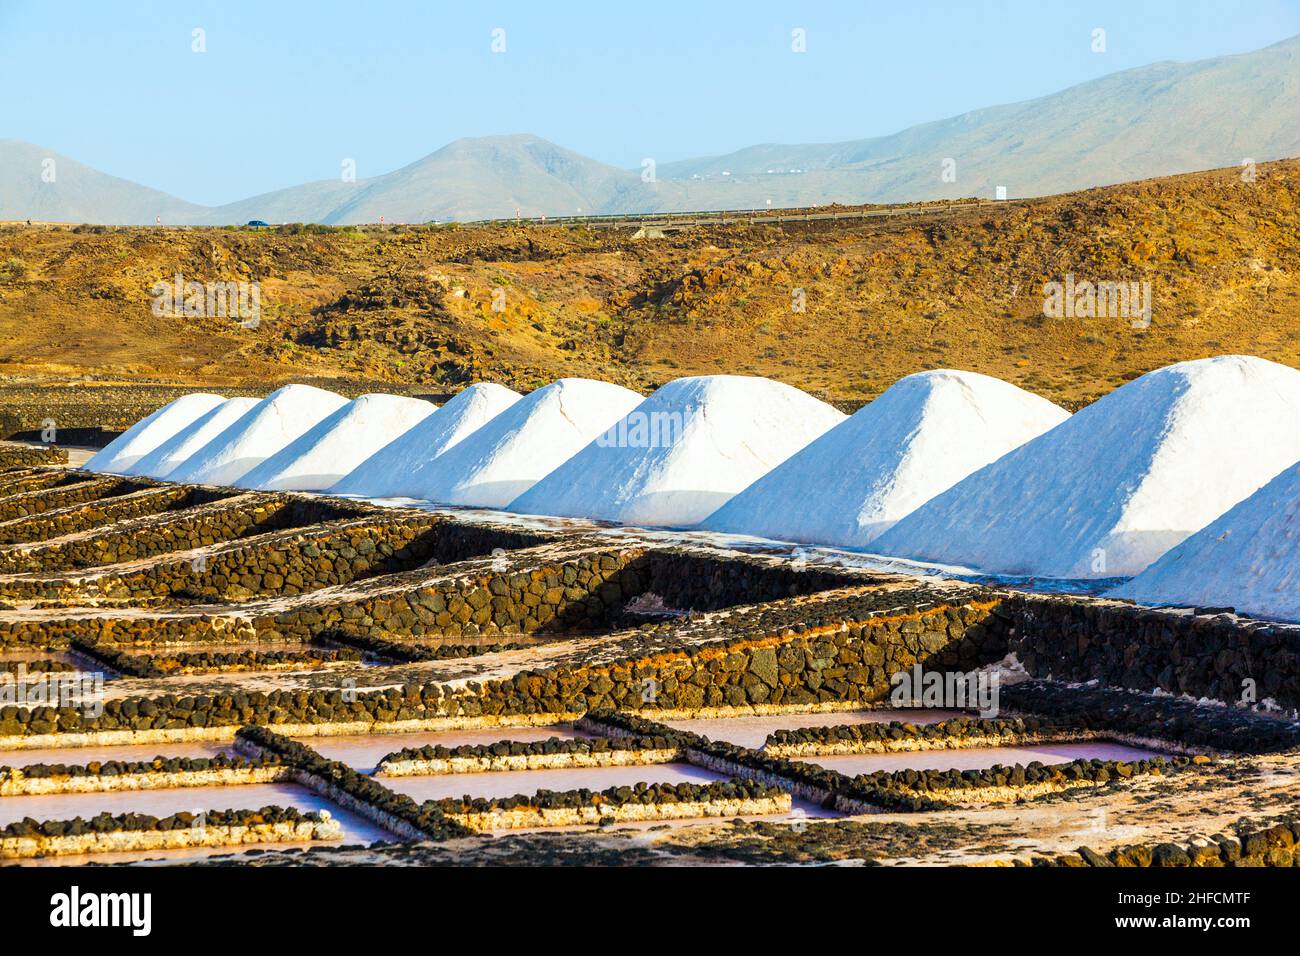 Salt refinery, Saline from Janubio, Lanzarote, Spain Stock Photo